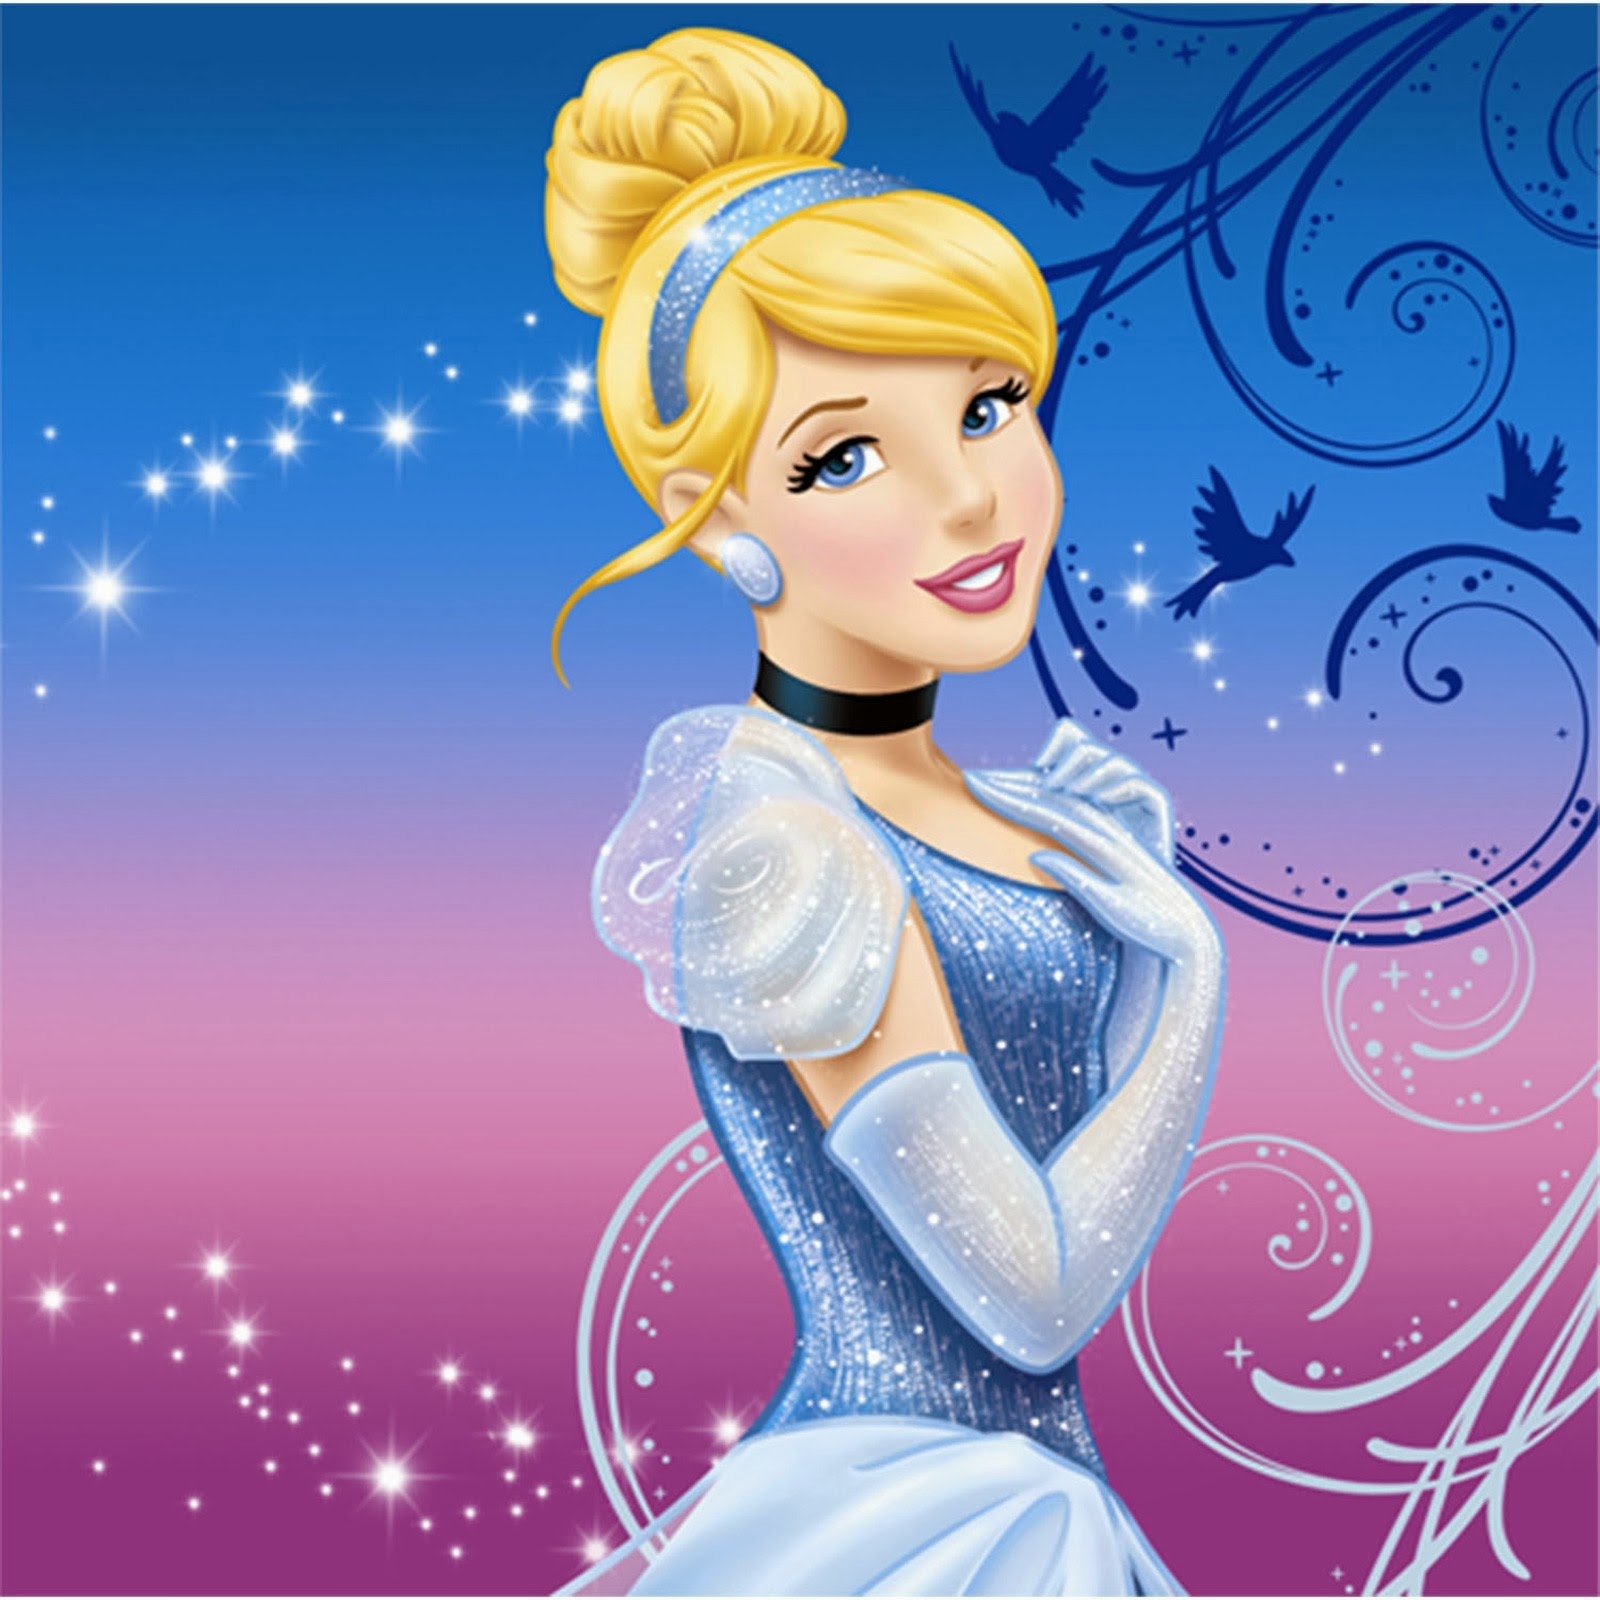 Princess Cinderella From Disney